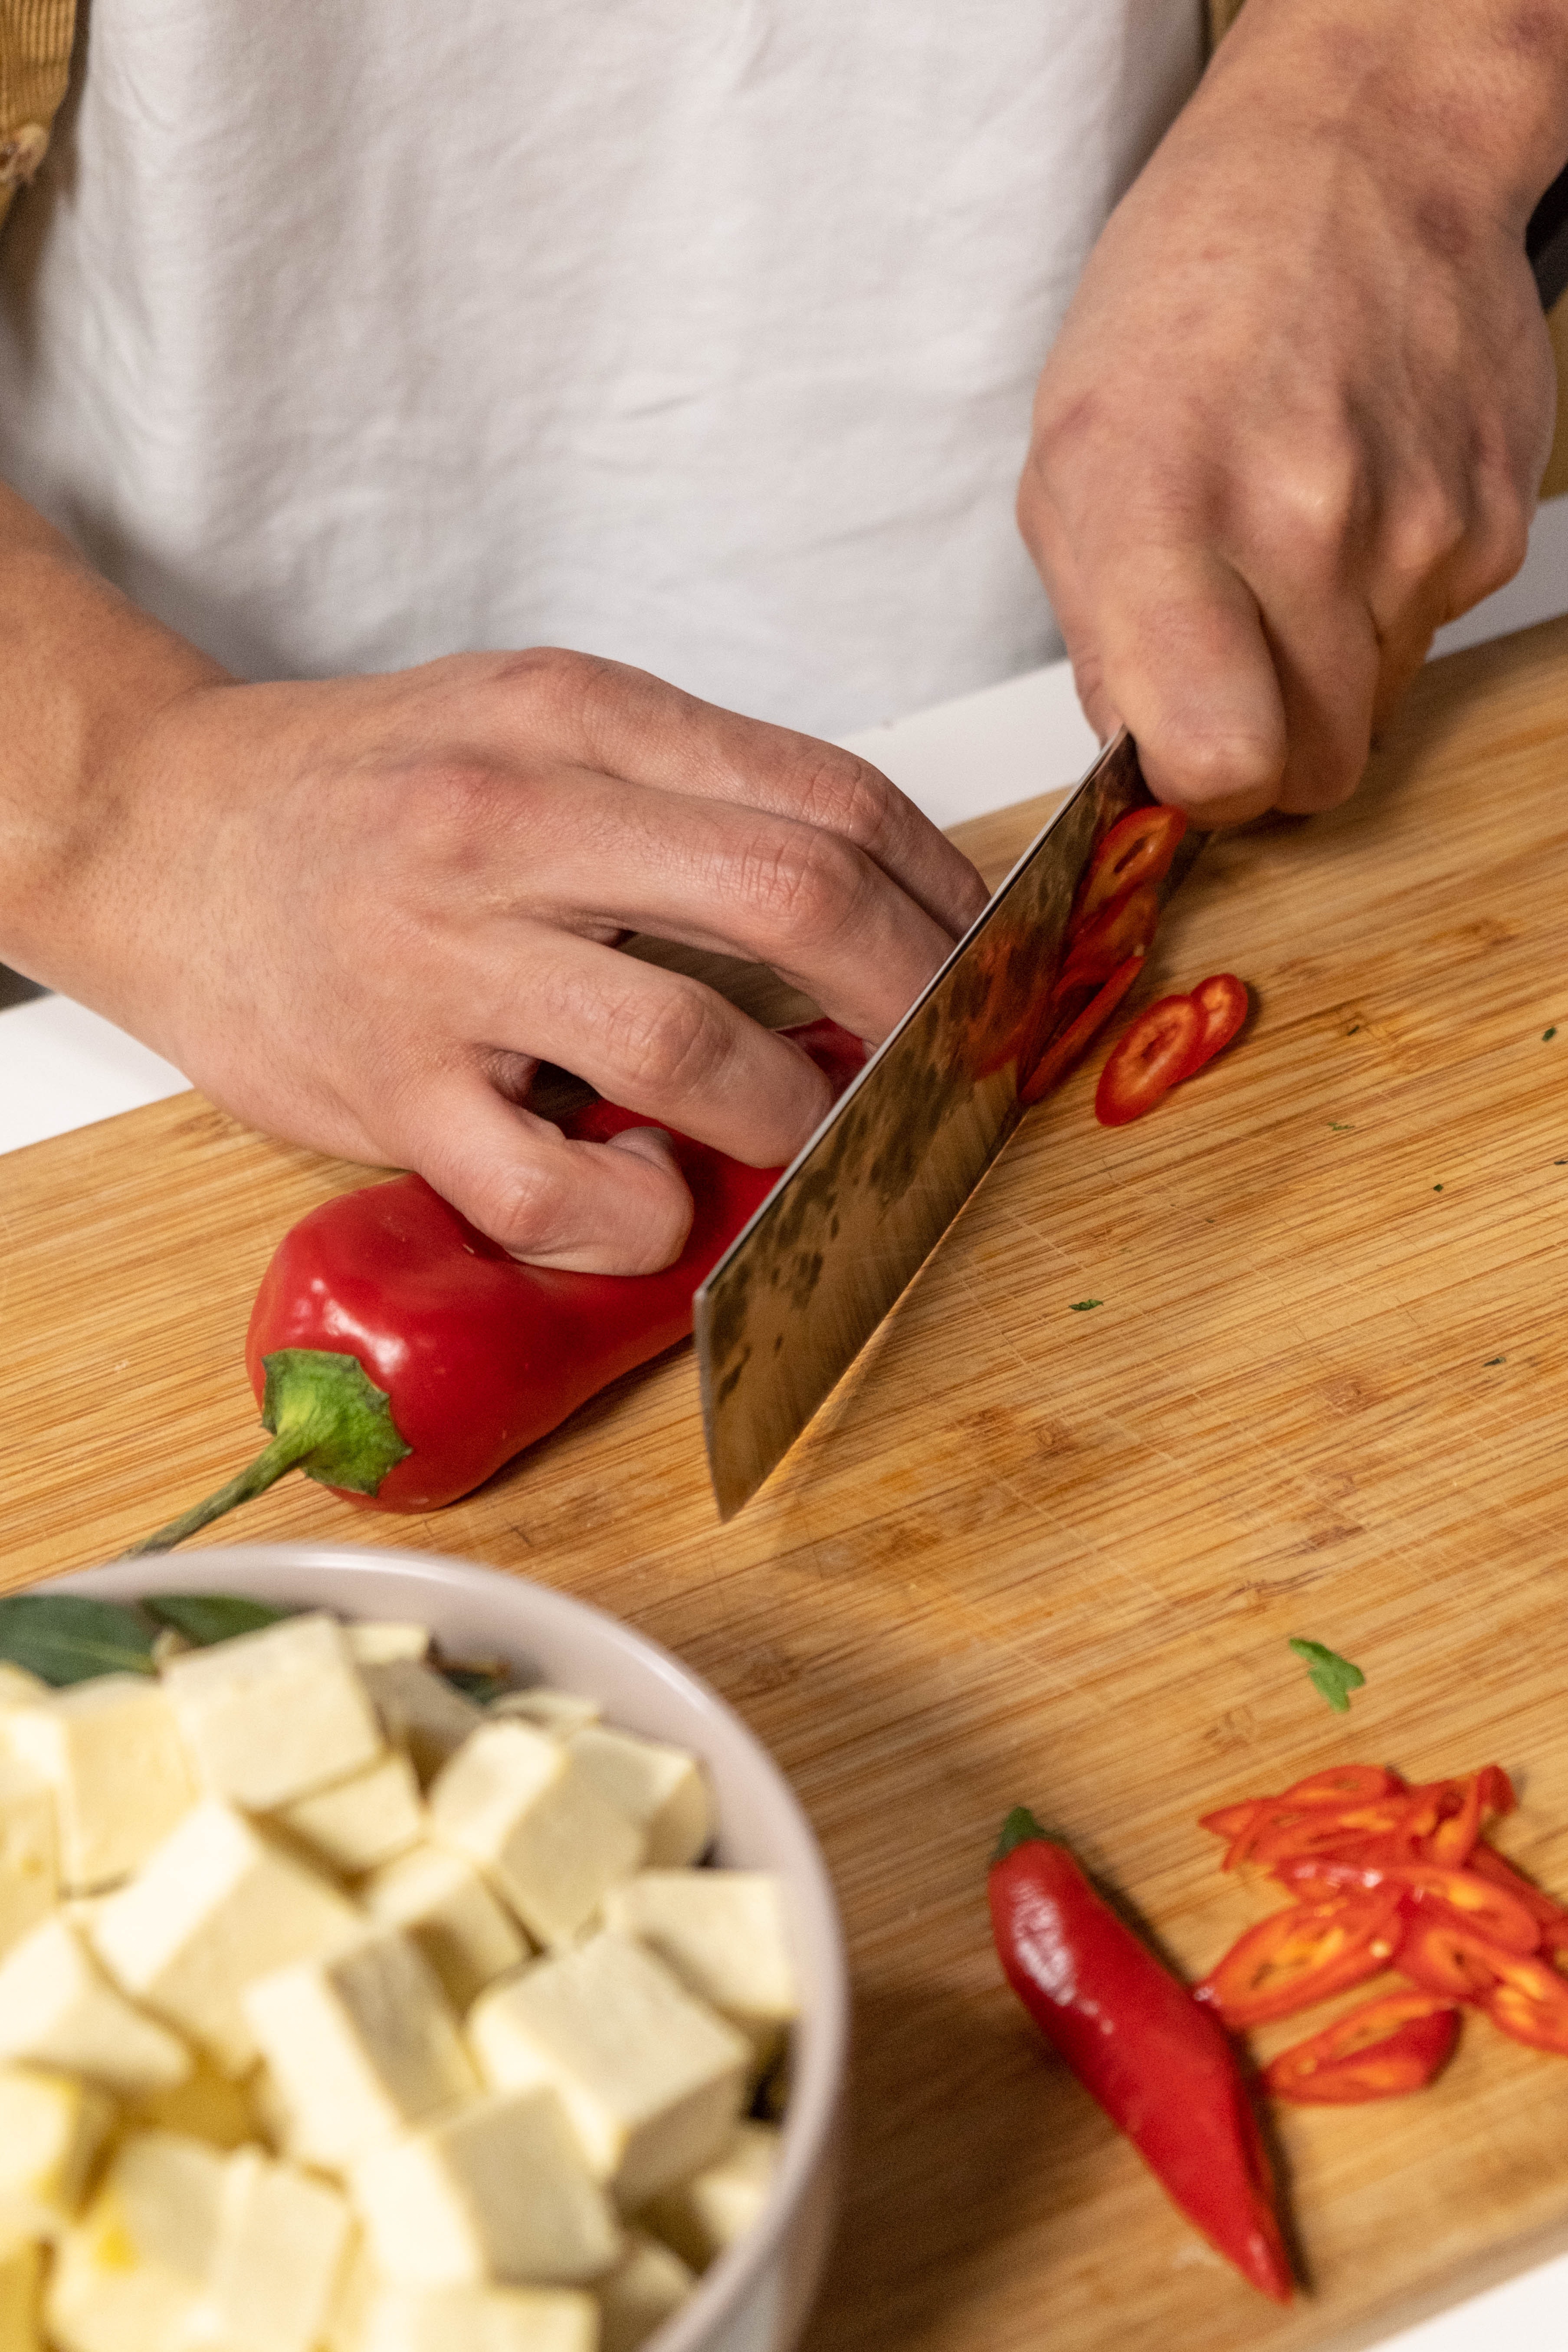 Chopping red bell pepper